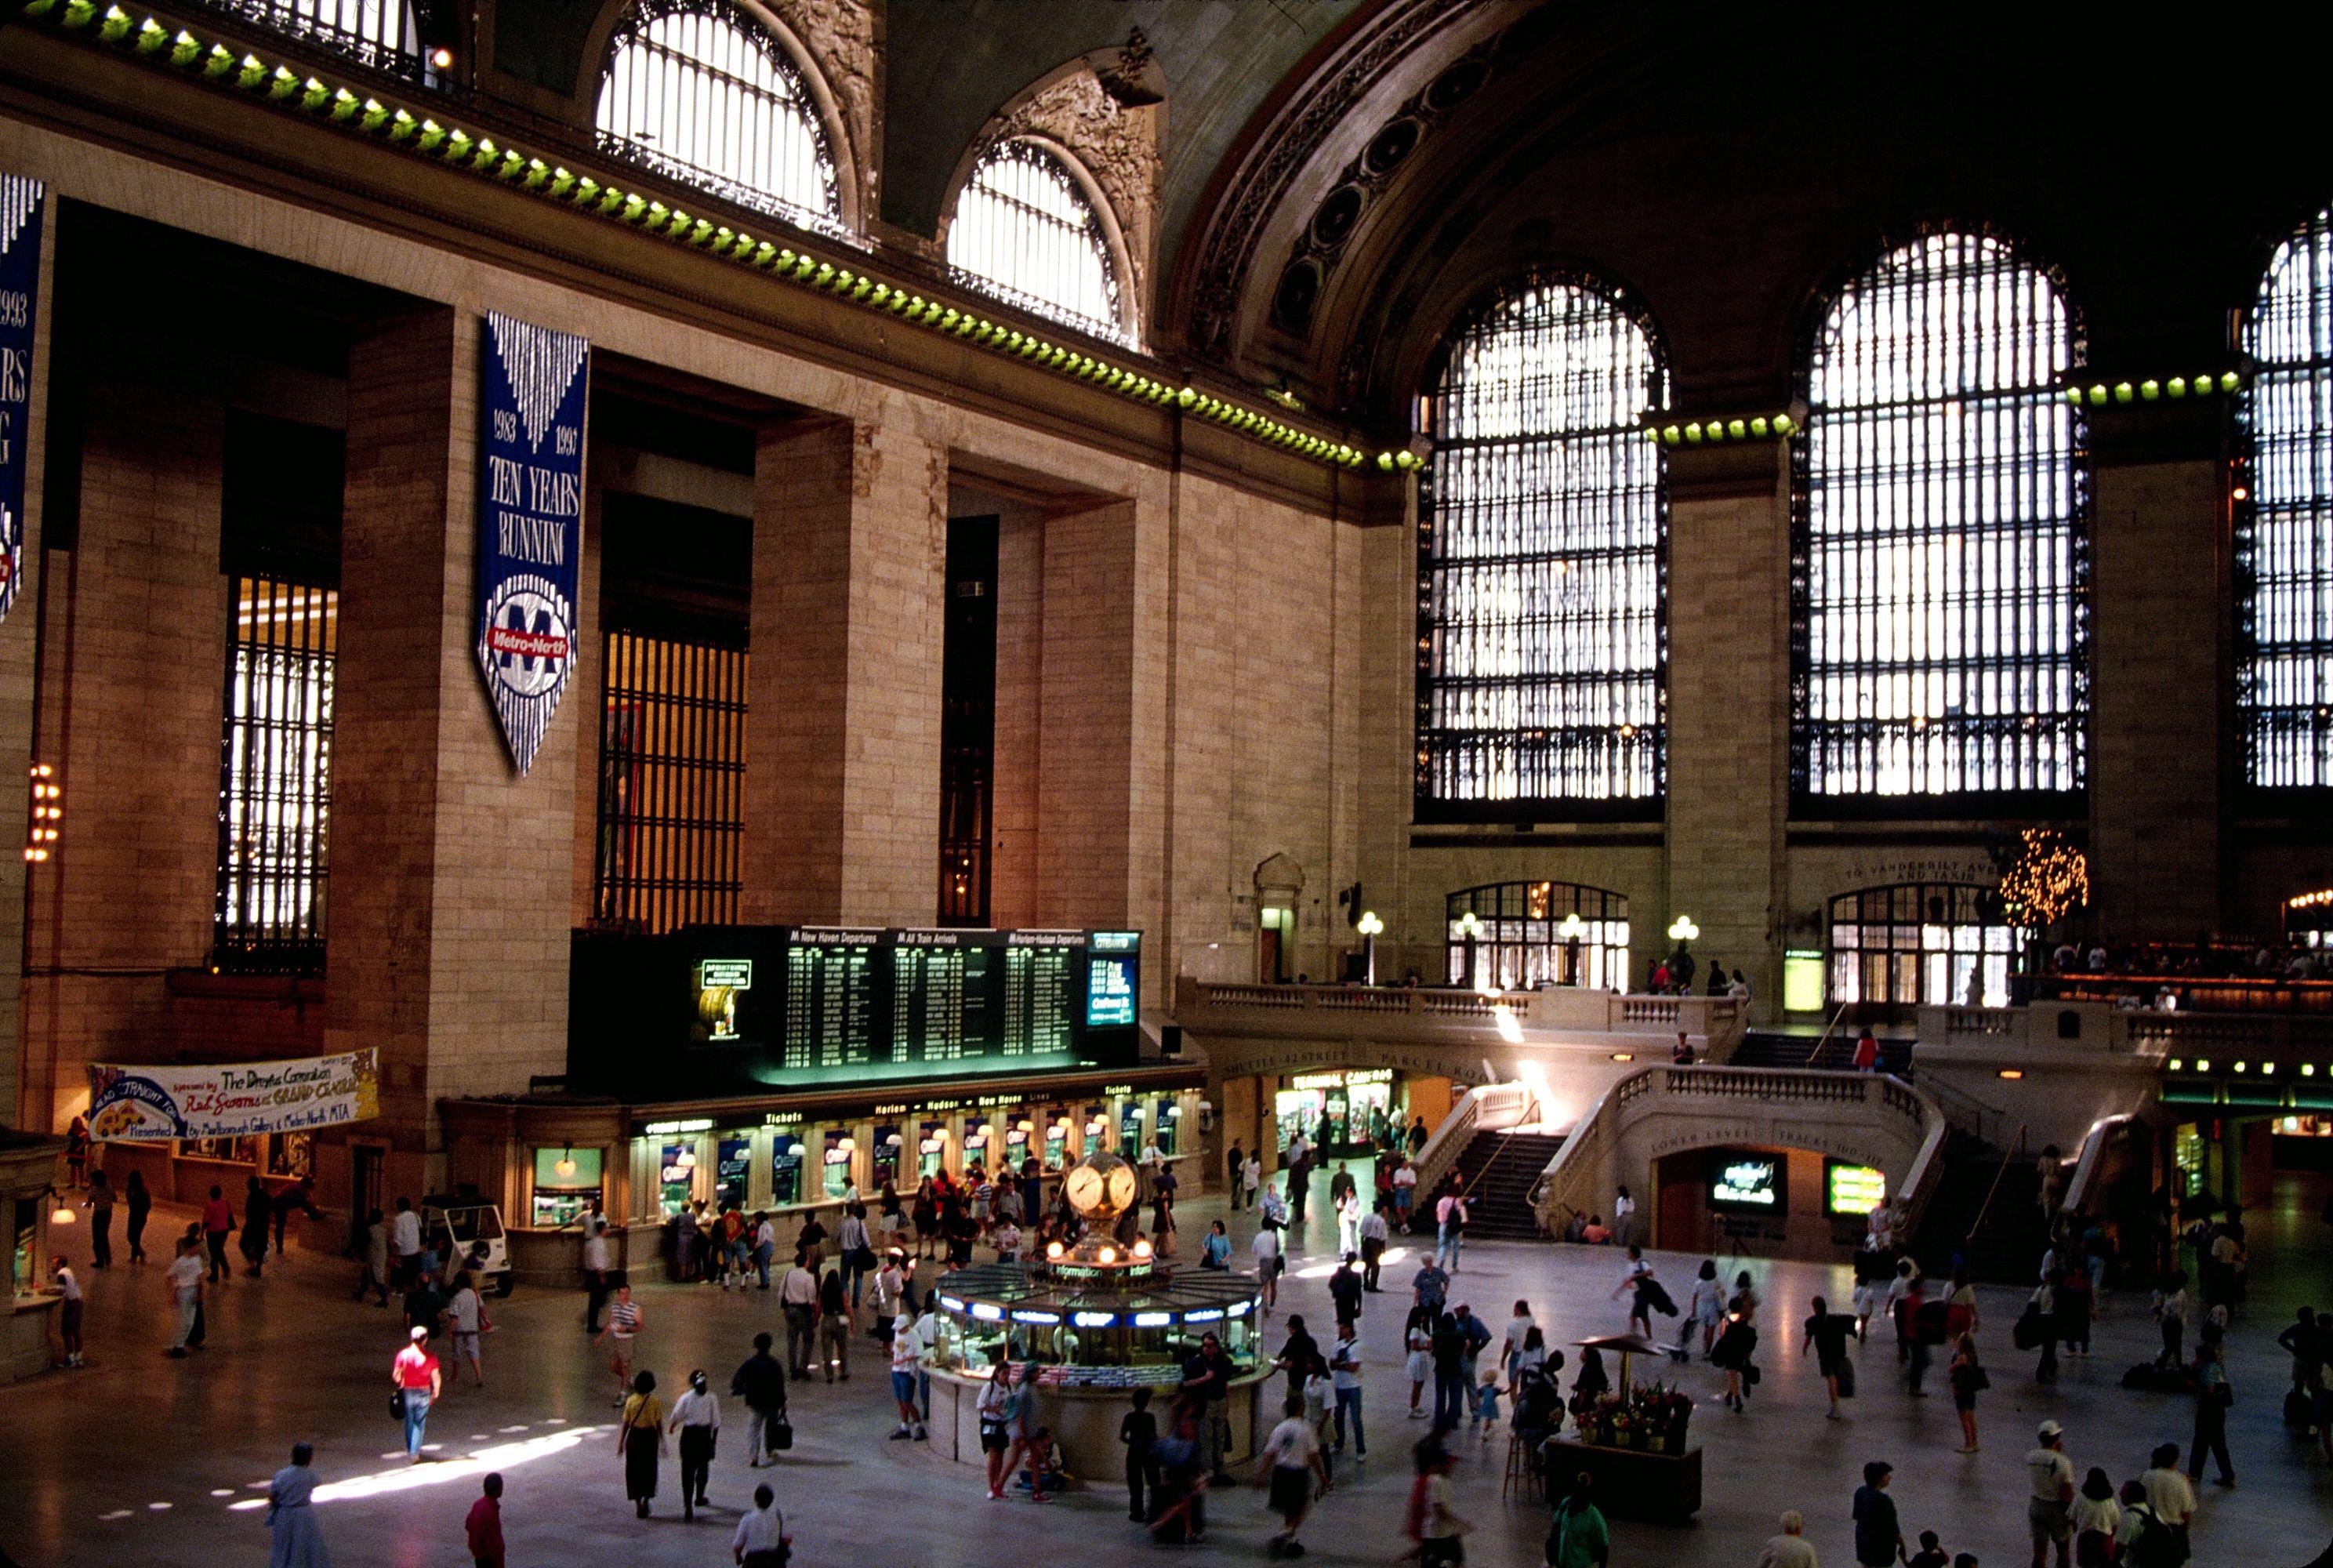 Центральный терминал. Гранд централ Нью-Йорк. Центральный вокзал Нью-Йорка. Вокзал Grand Central в Нью-Йорке. Grand Central Terminal), Нью-Йорк, США.